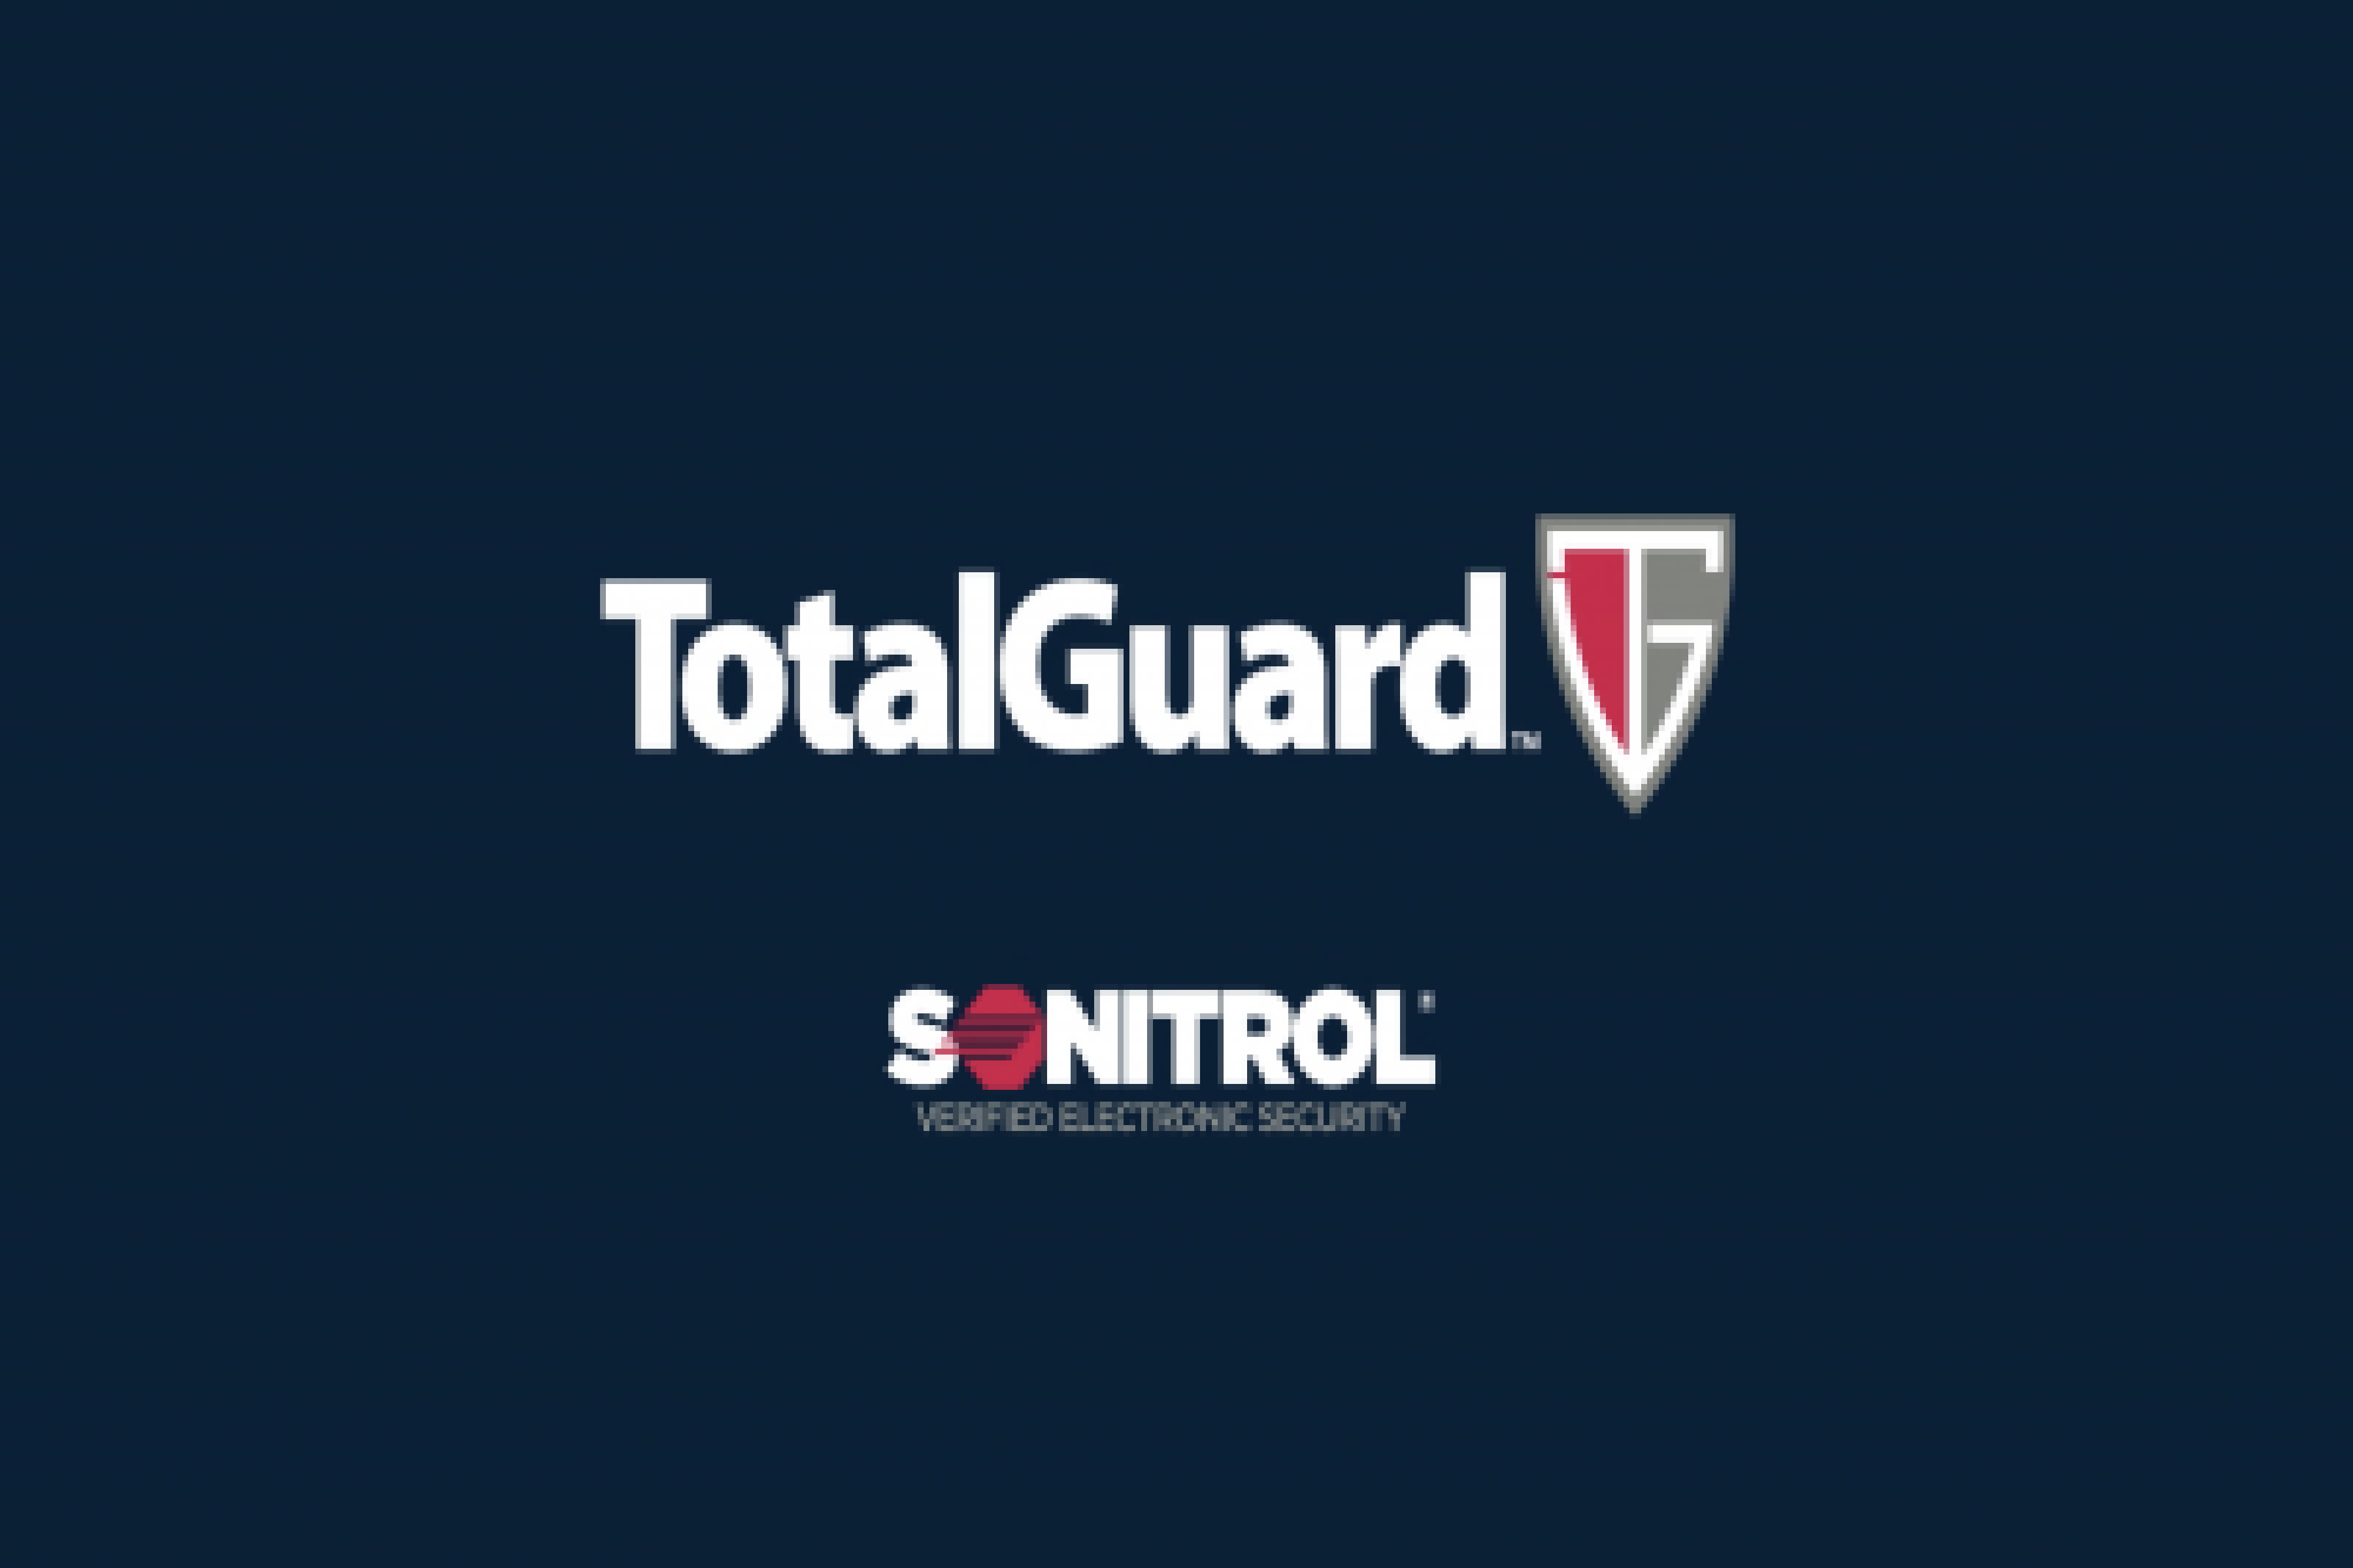 TotalGuard Logo with Sonitrol logo